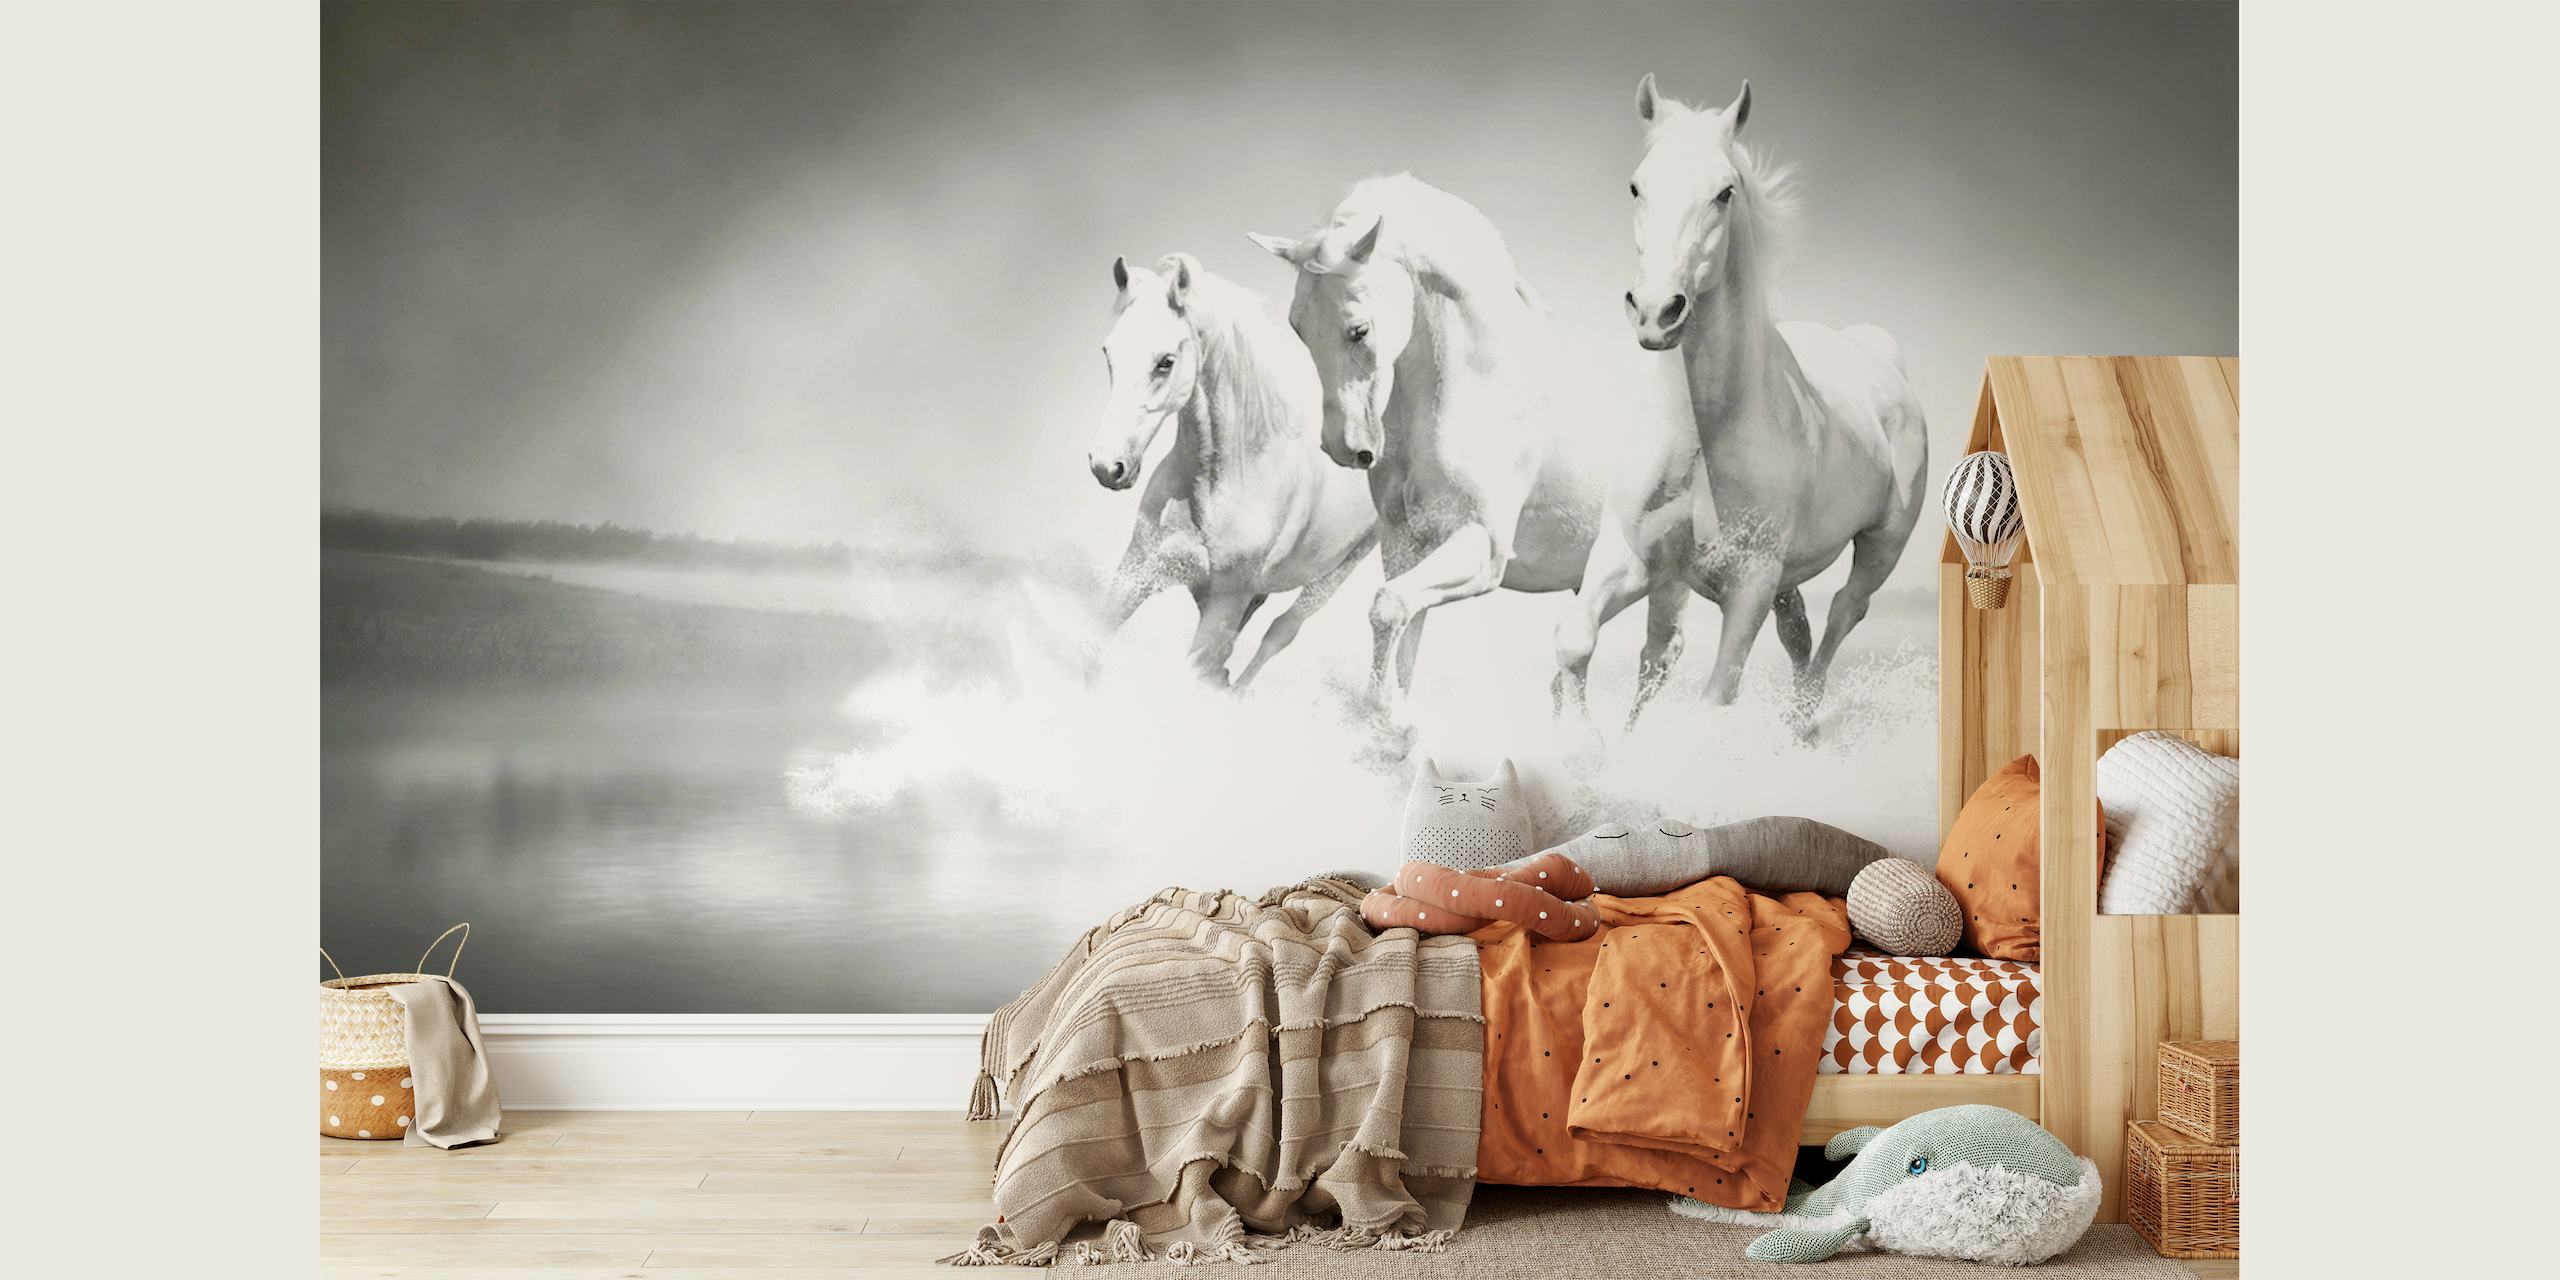 White horses running papel pintado